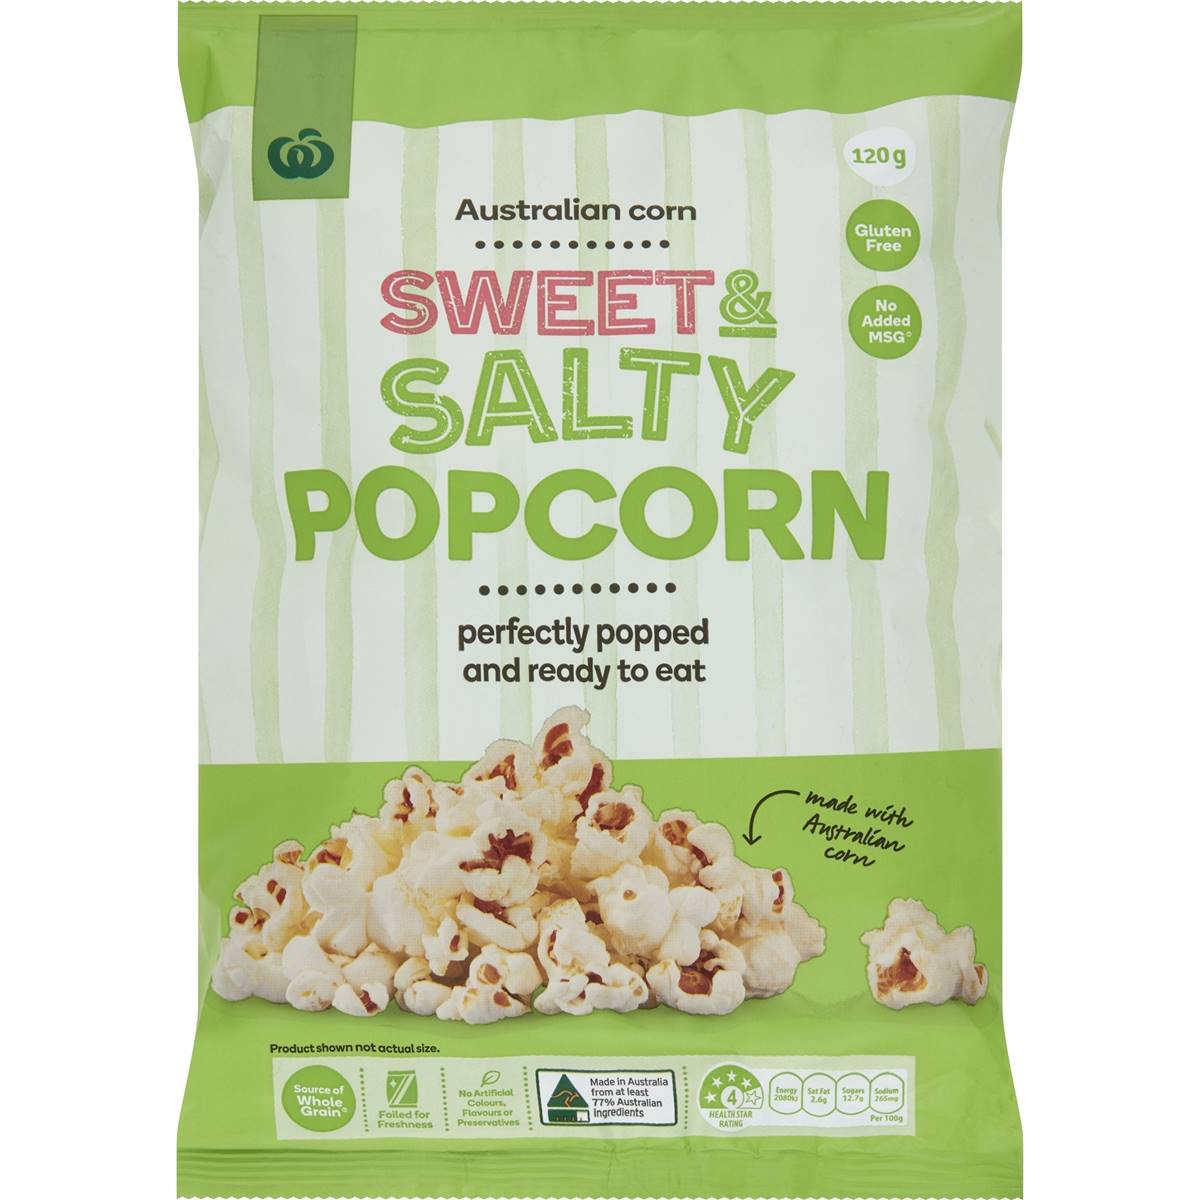 Calories in Woolworths Gluten Free Popcorn Sweet & Salty